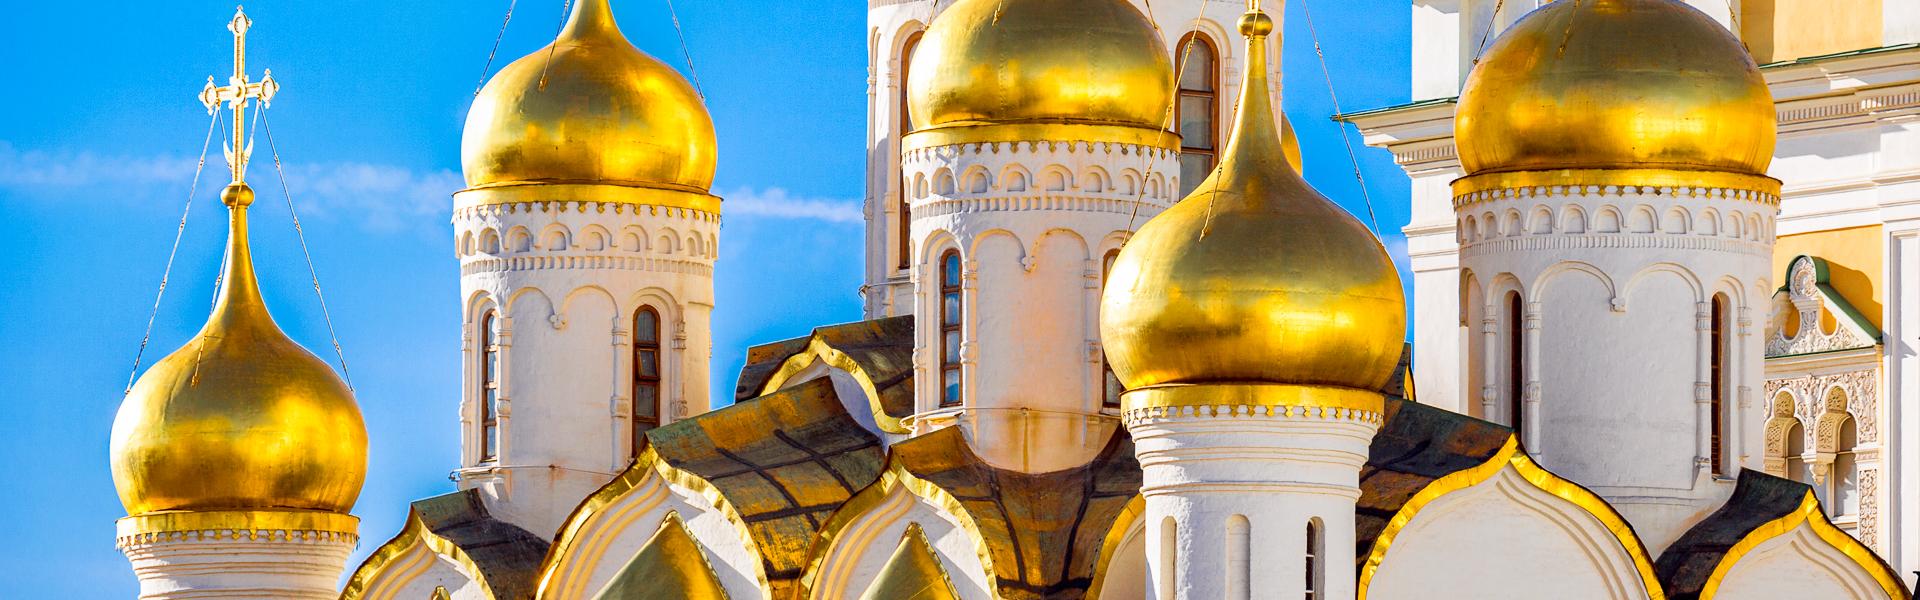 Goldene Kuppeln der Russischen Kirche |  Mordolff, iStockphoto.com / Chamleon